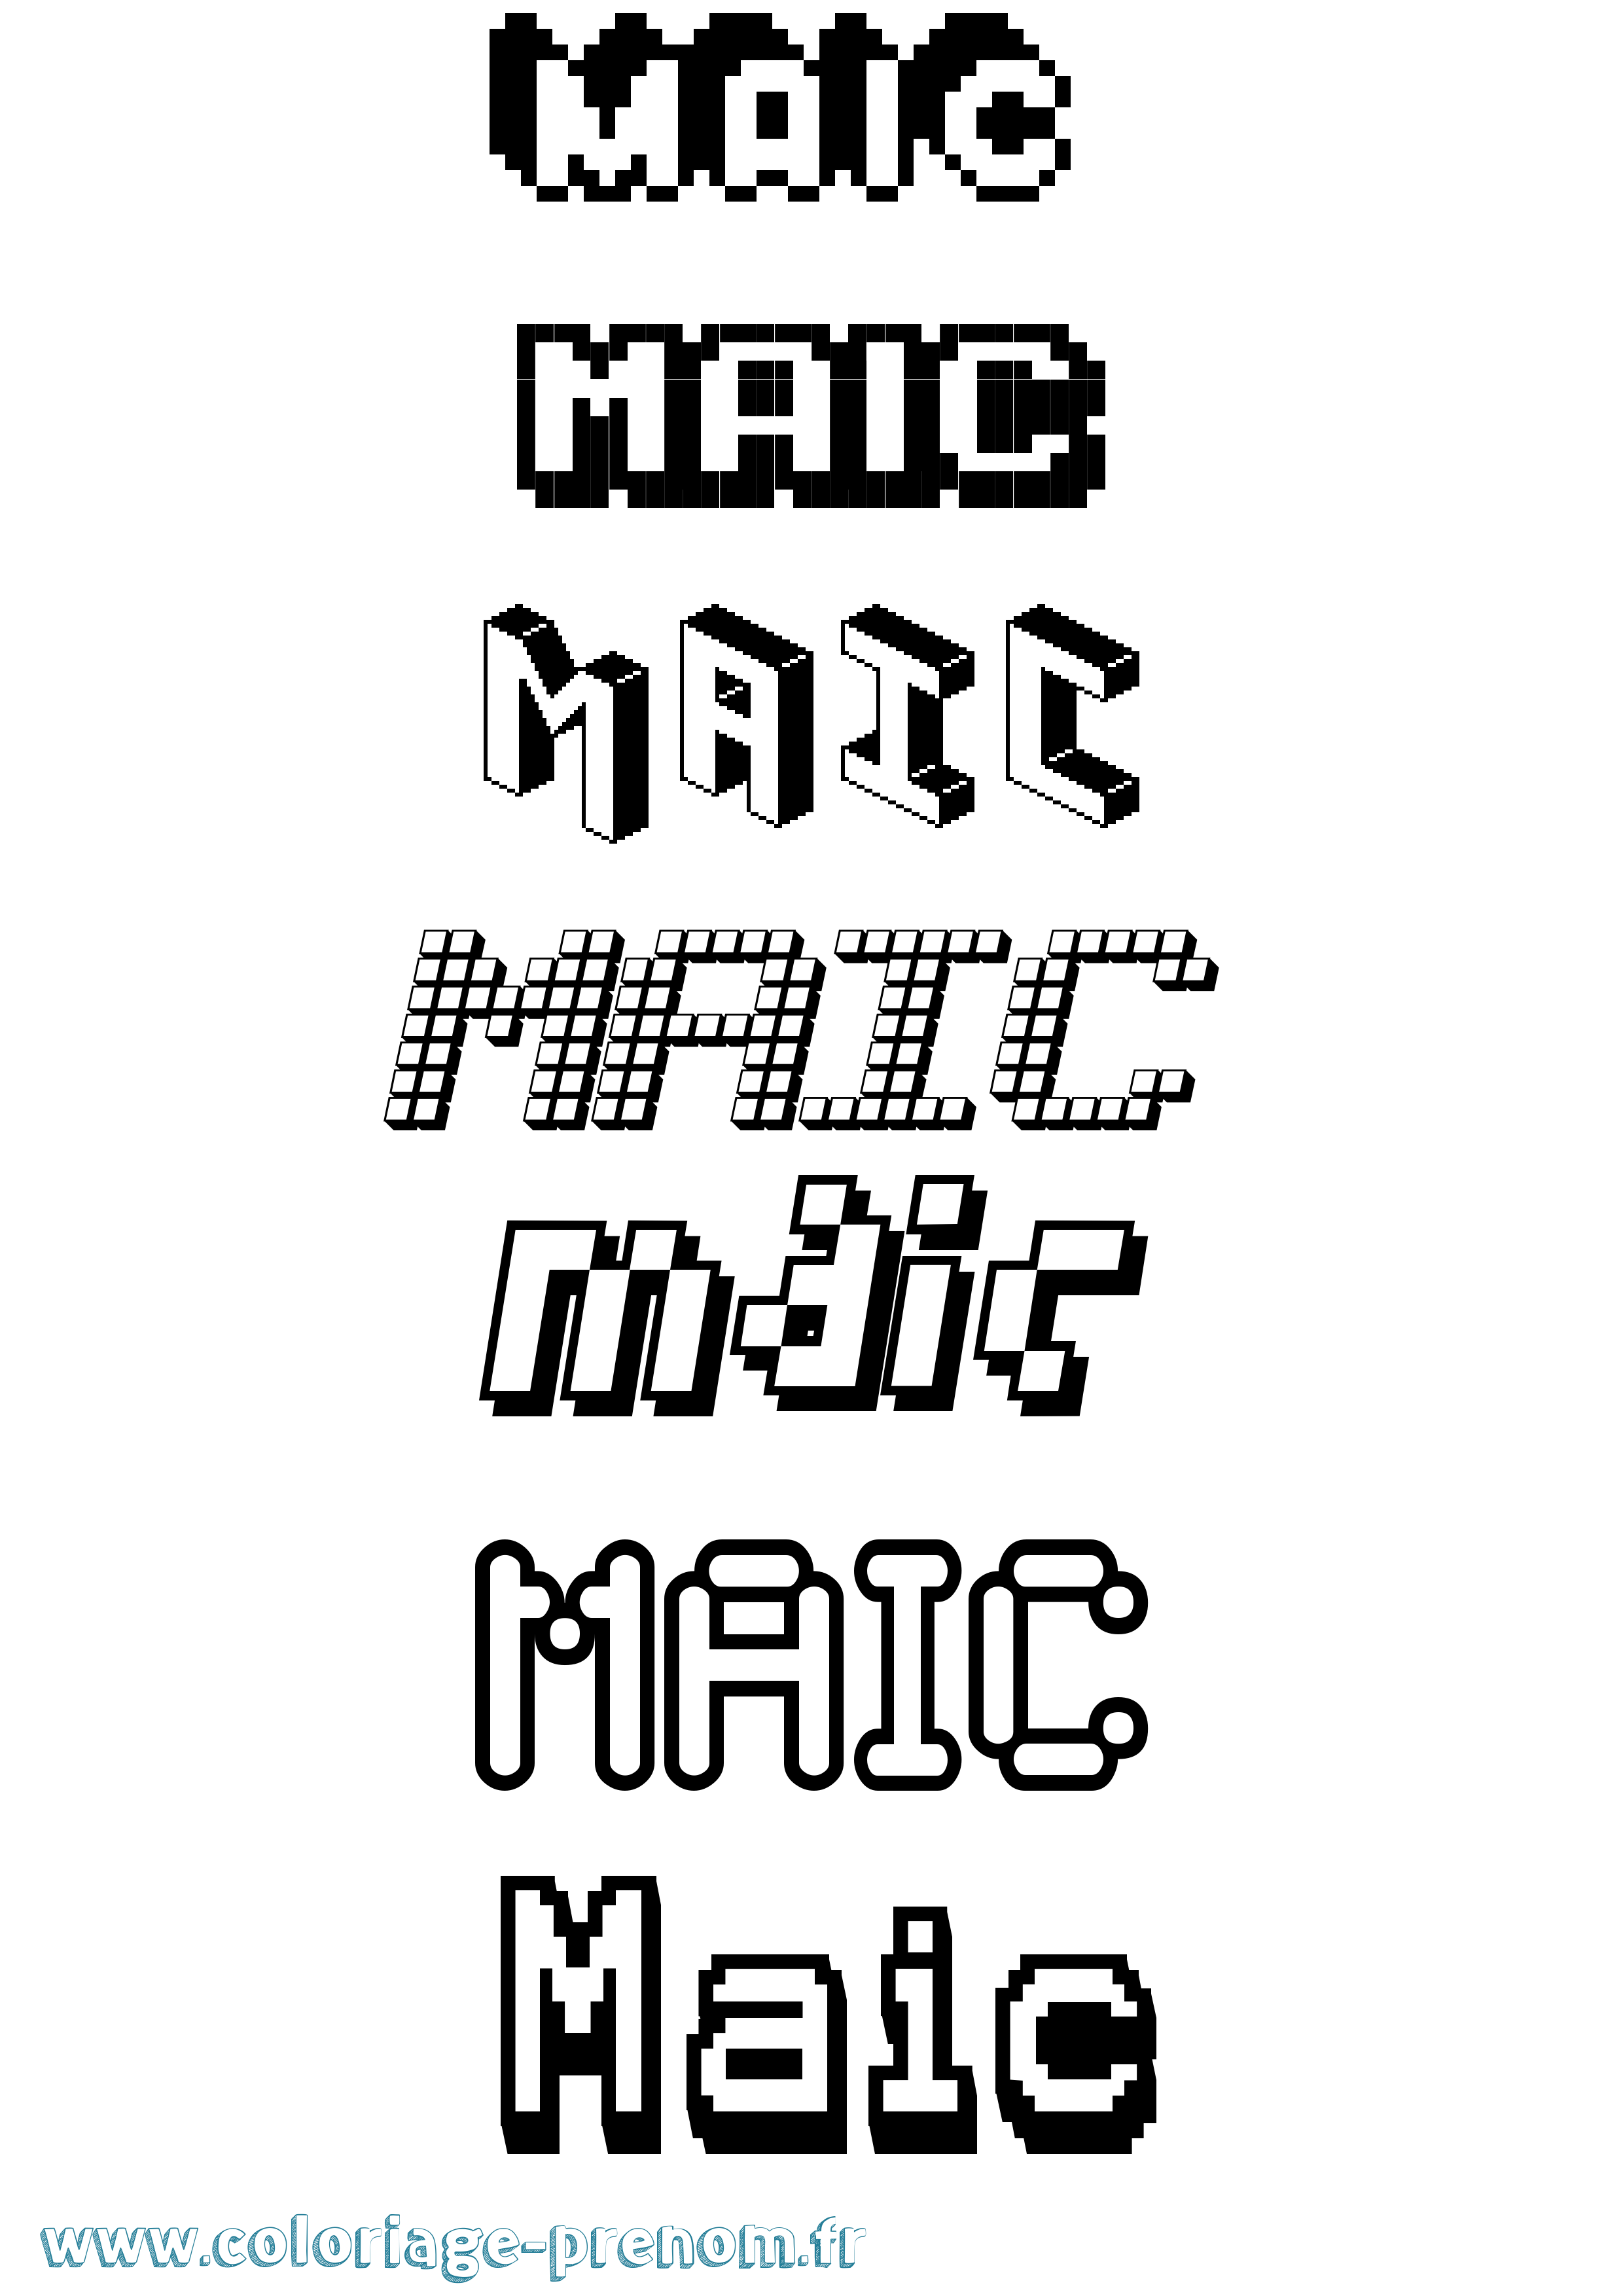 Coloriage prénom Maic Pixel